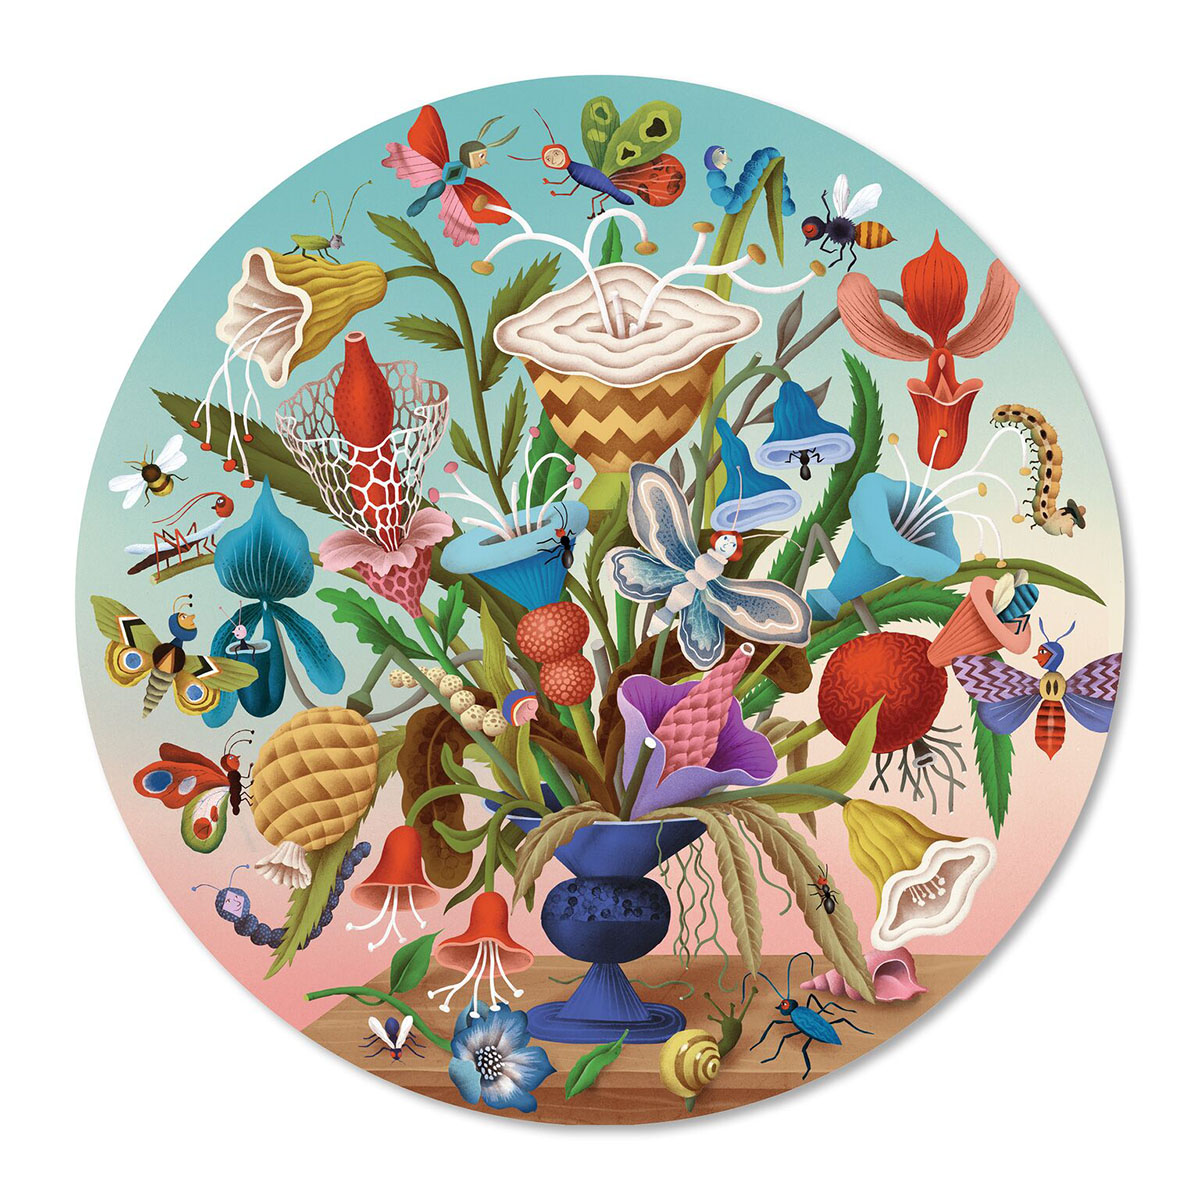 Joyful Flower & Garden Jigsaw Puzzle By Galison